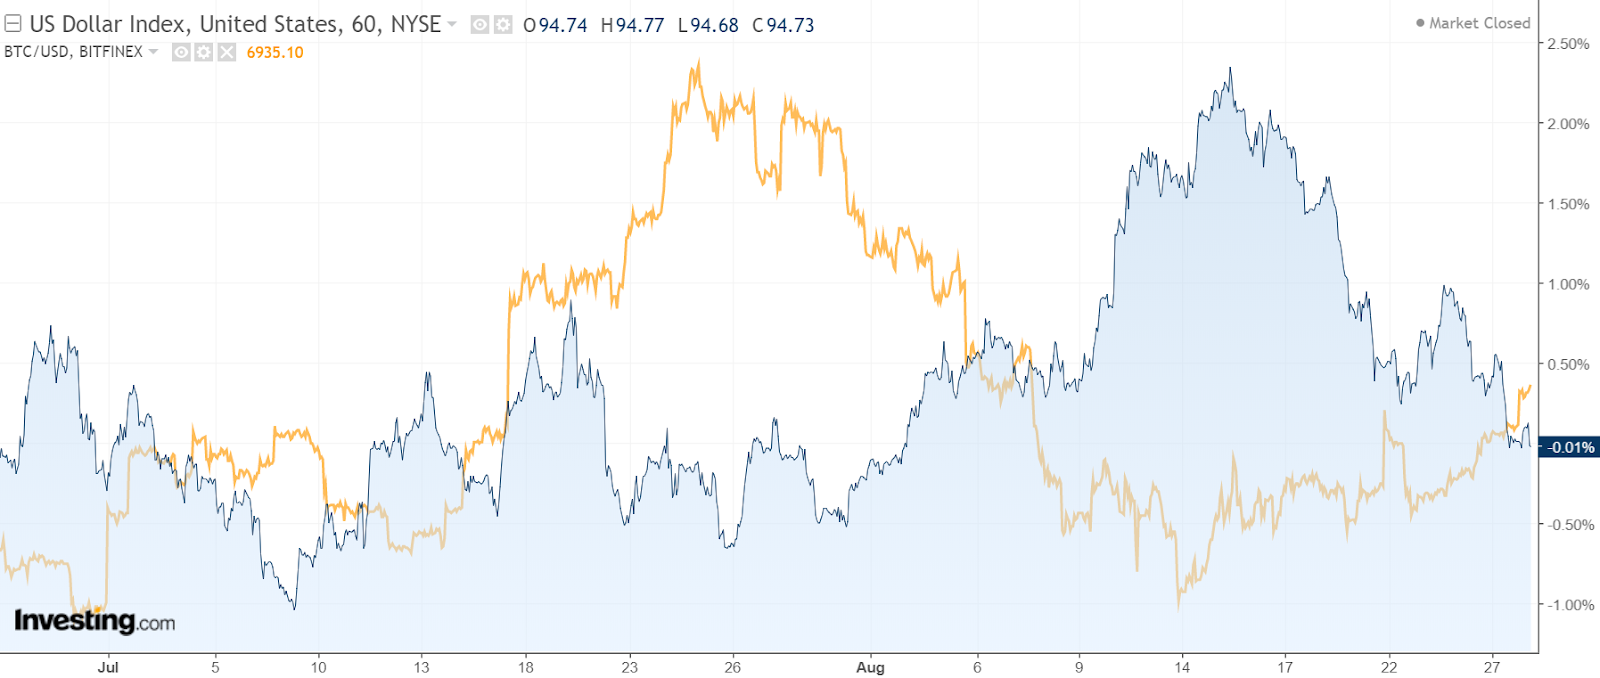 Bitcoin USD (BTC-USD) Price History & Historical Data - Yahoo Finance